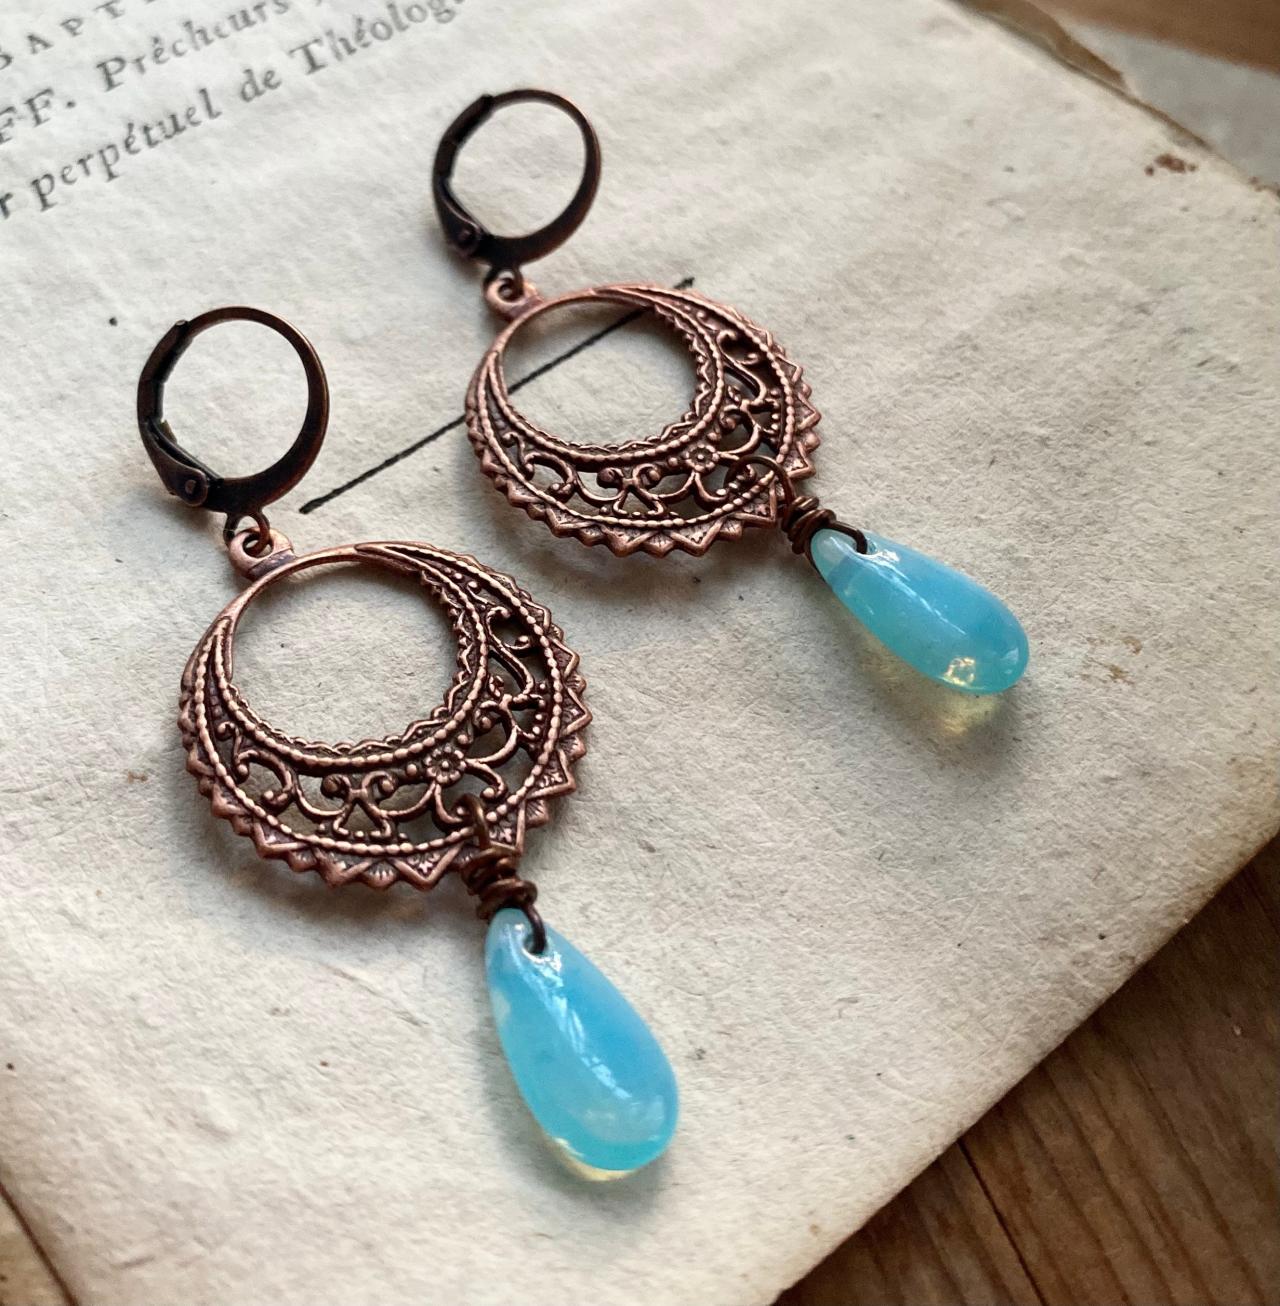 Copper Filigree Earrings With Blue Glass Teardrops Aqua Leverbacks, Handmade Jewelry Boho Style Earrings.